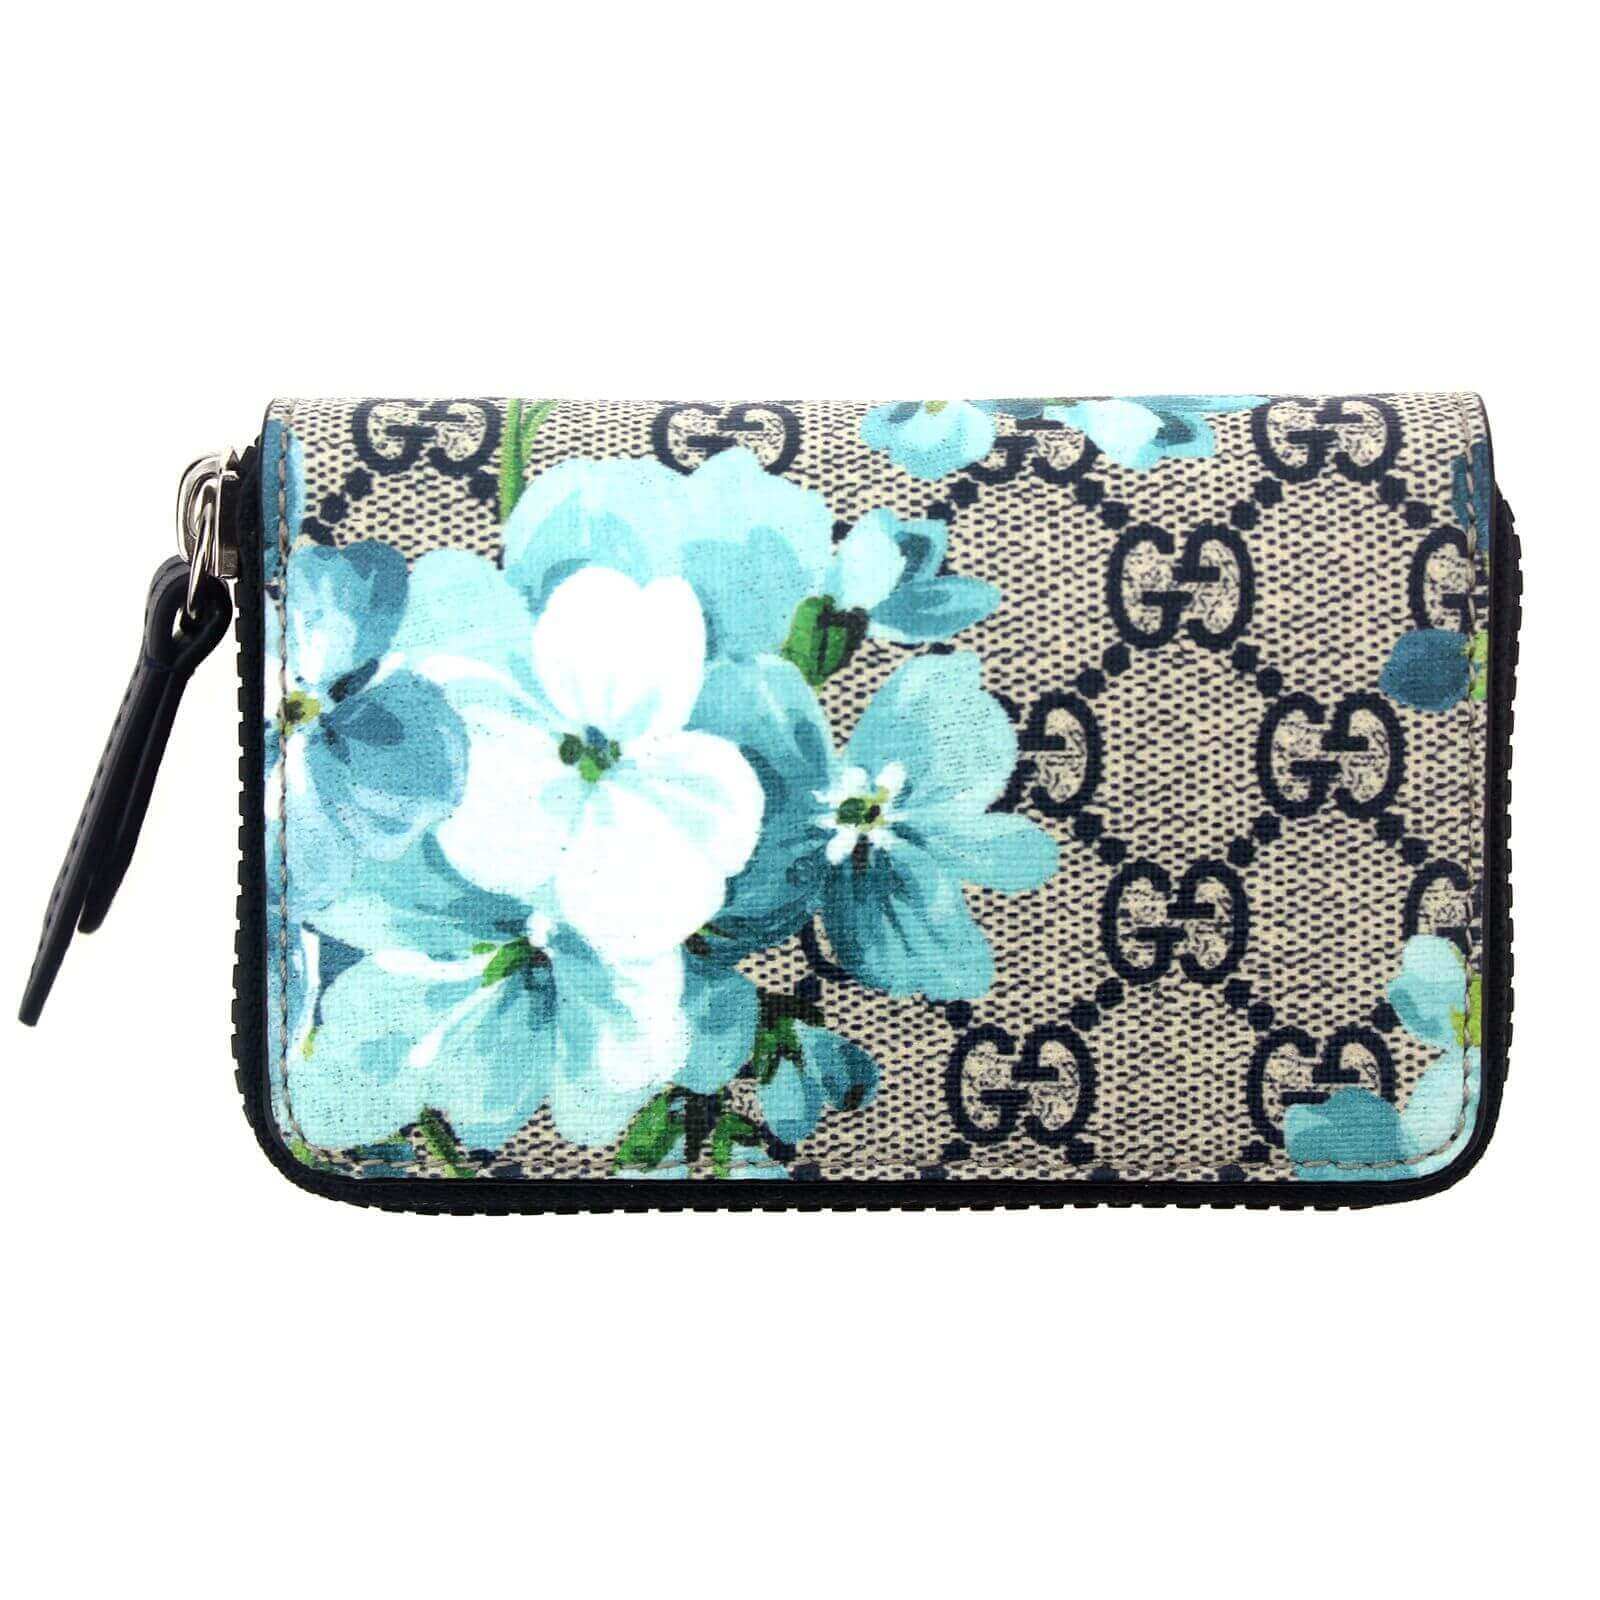 gucci bloom wallet blue